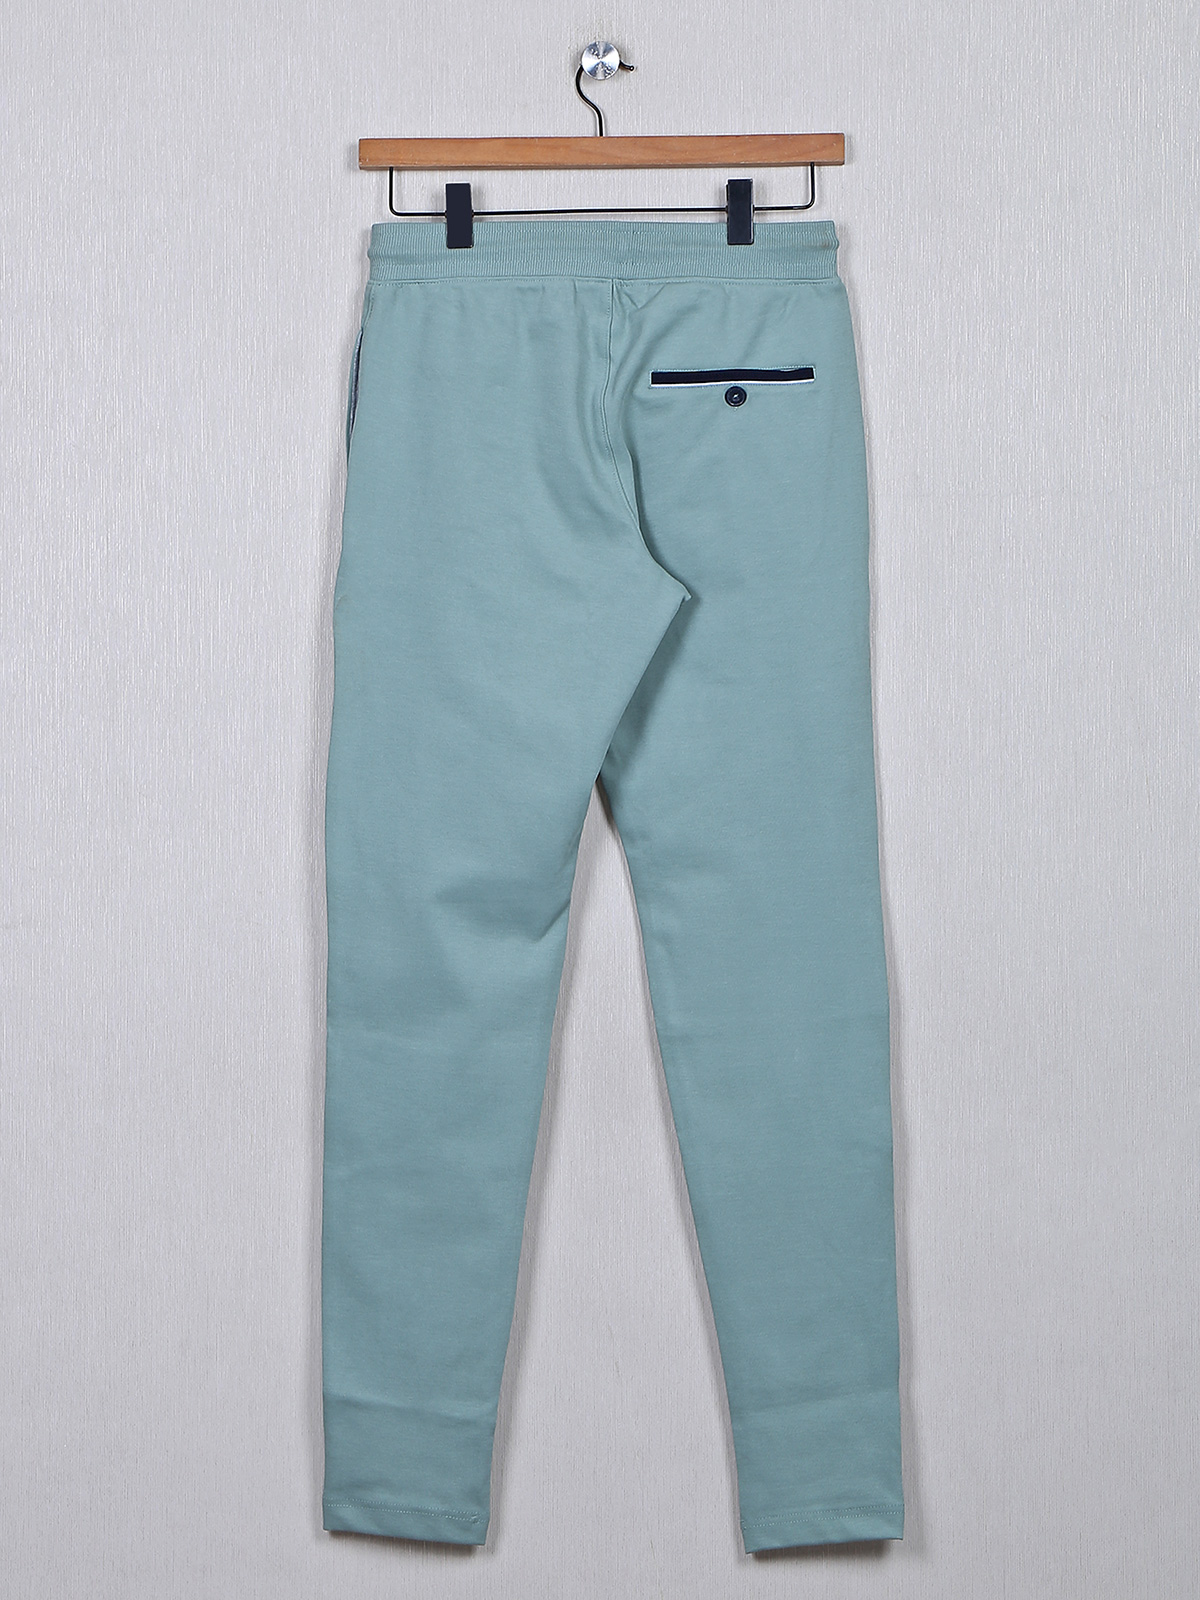 Womens Sea Green Linen Blend Drawstring Pants Size Large | eBay